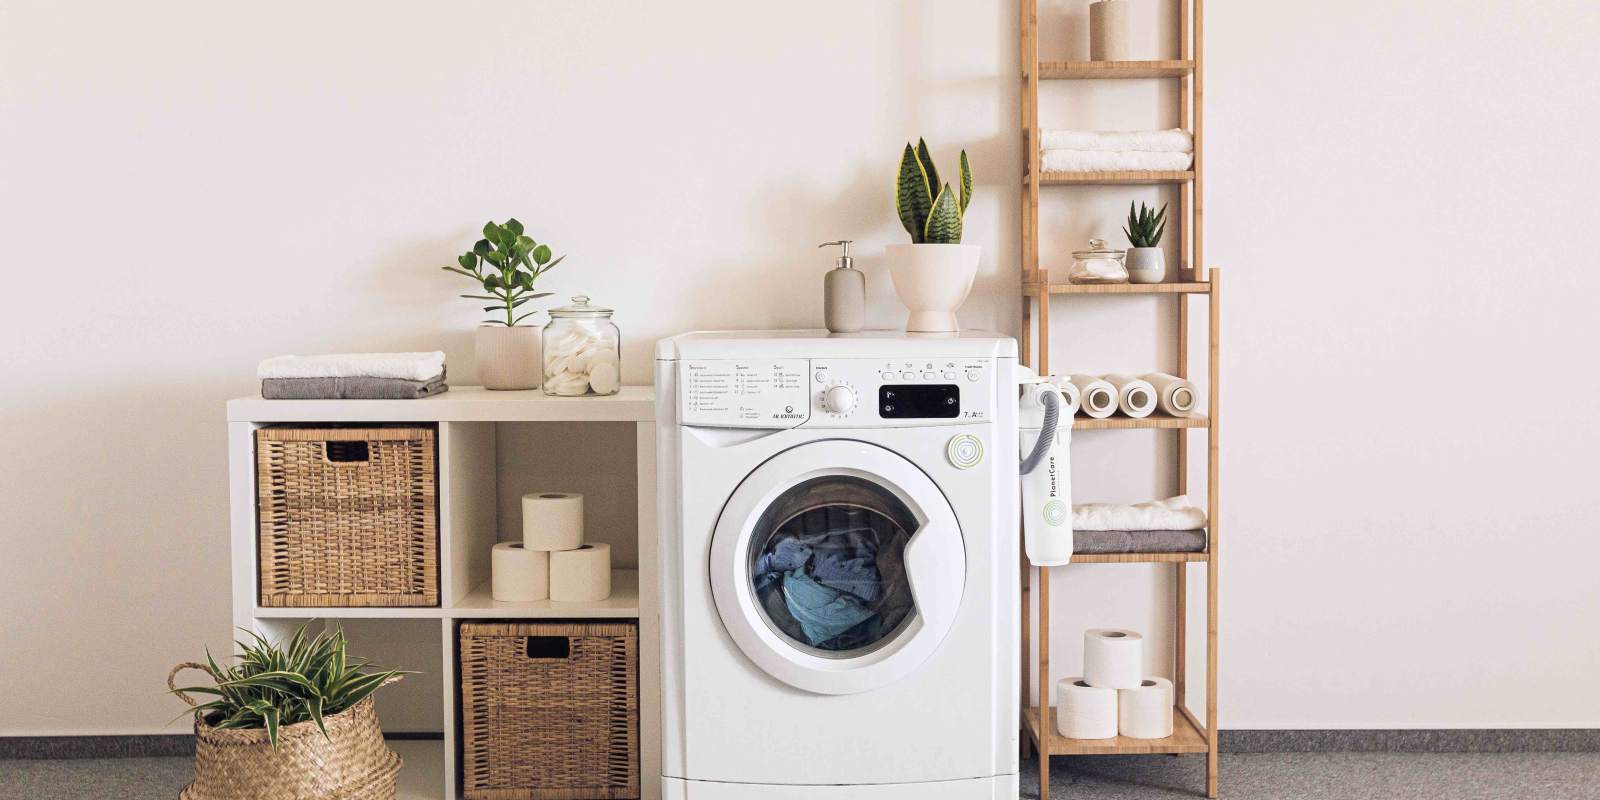 Photo: Washingmachine and shelves (Source: Unsplash)